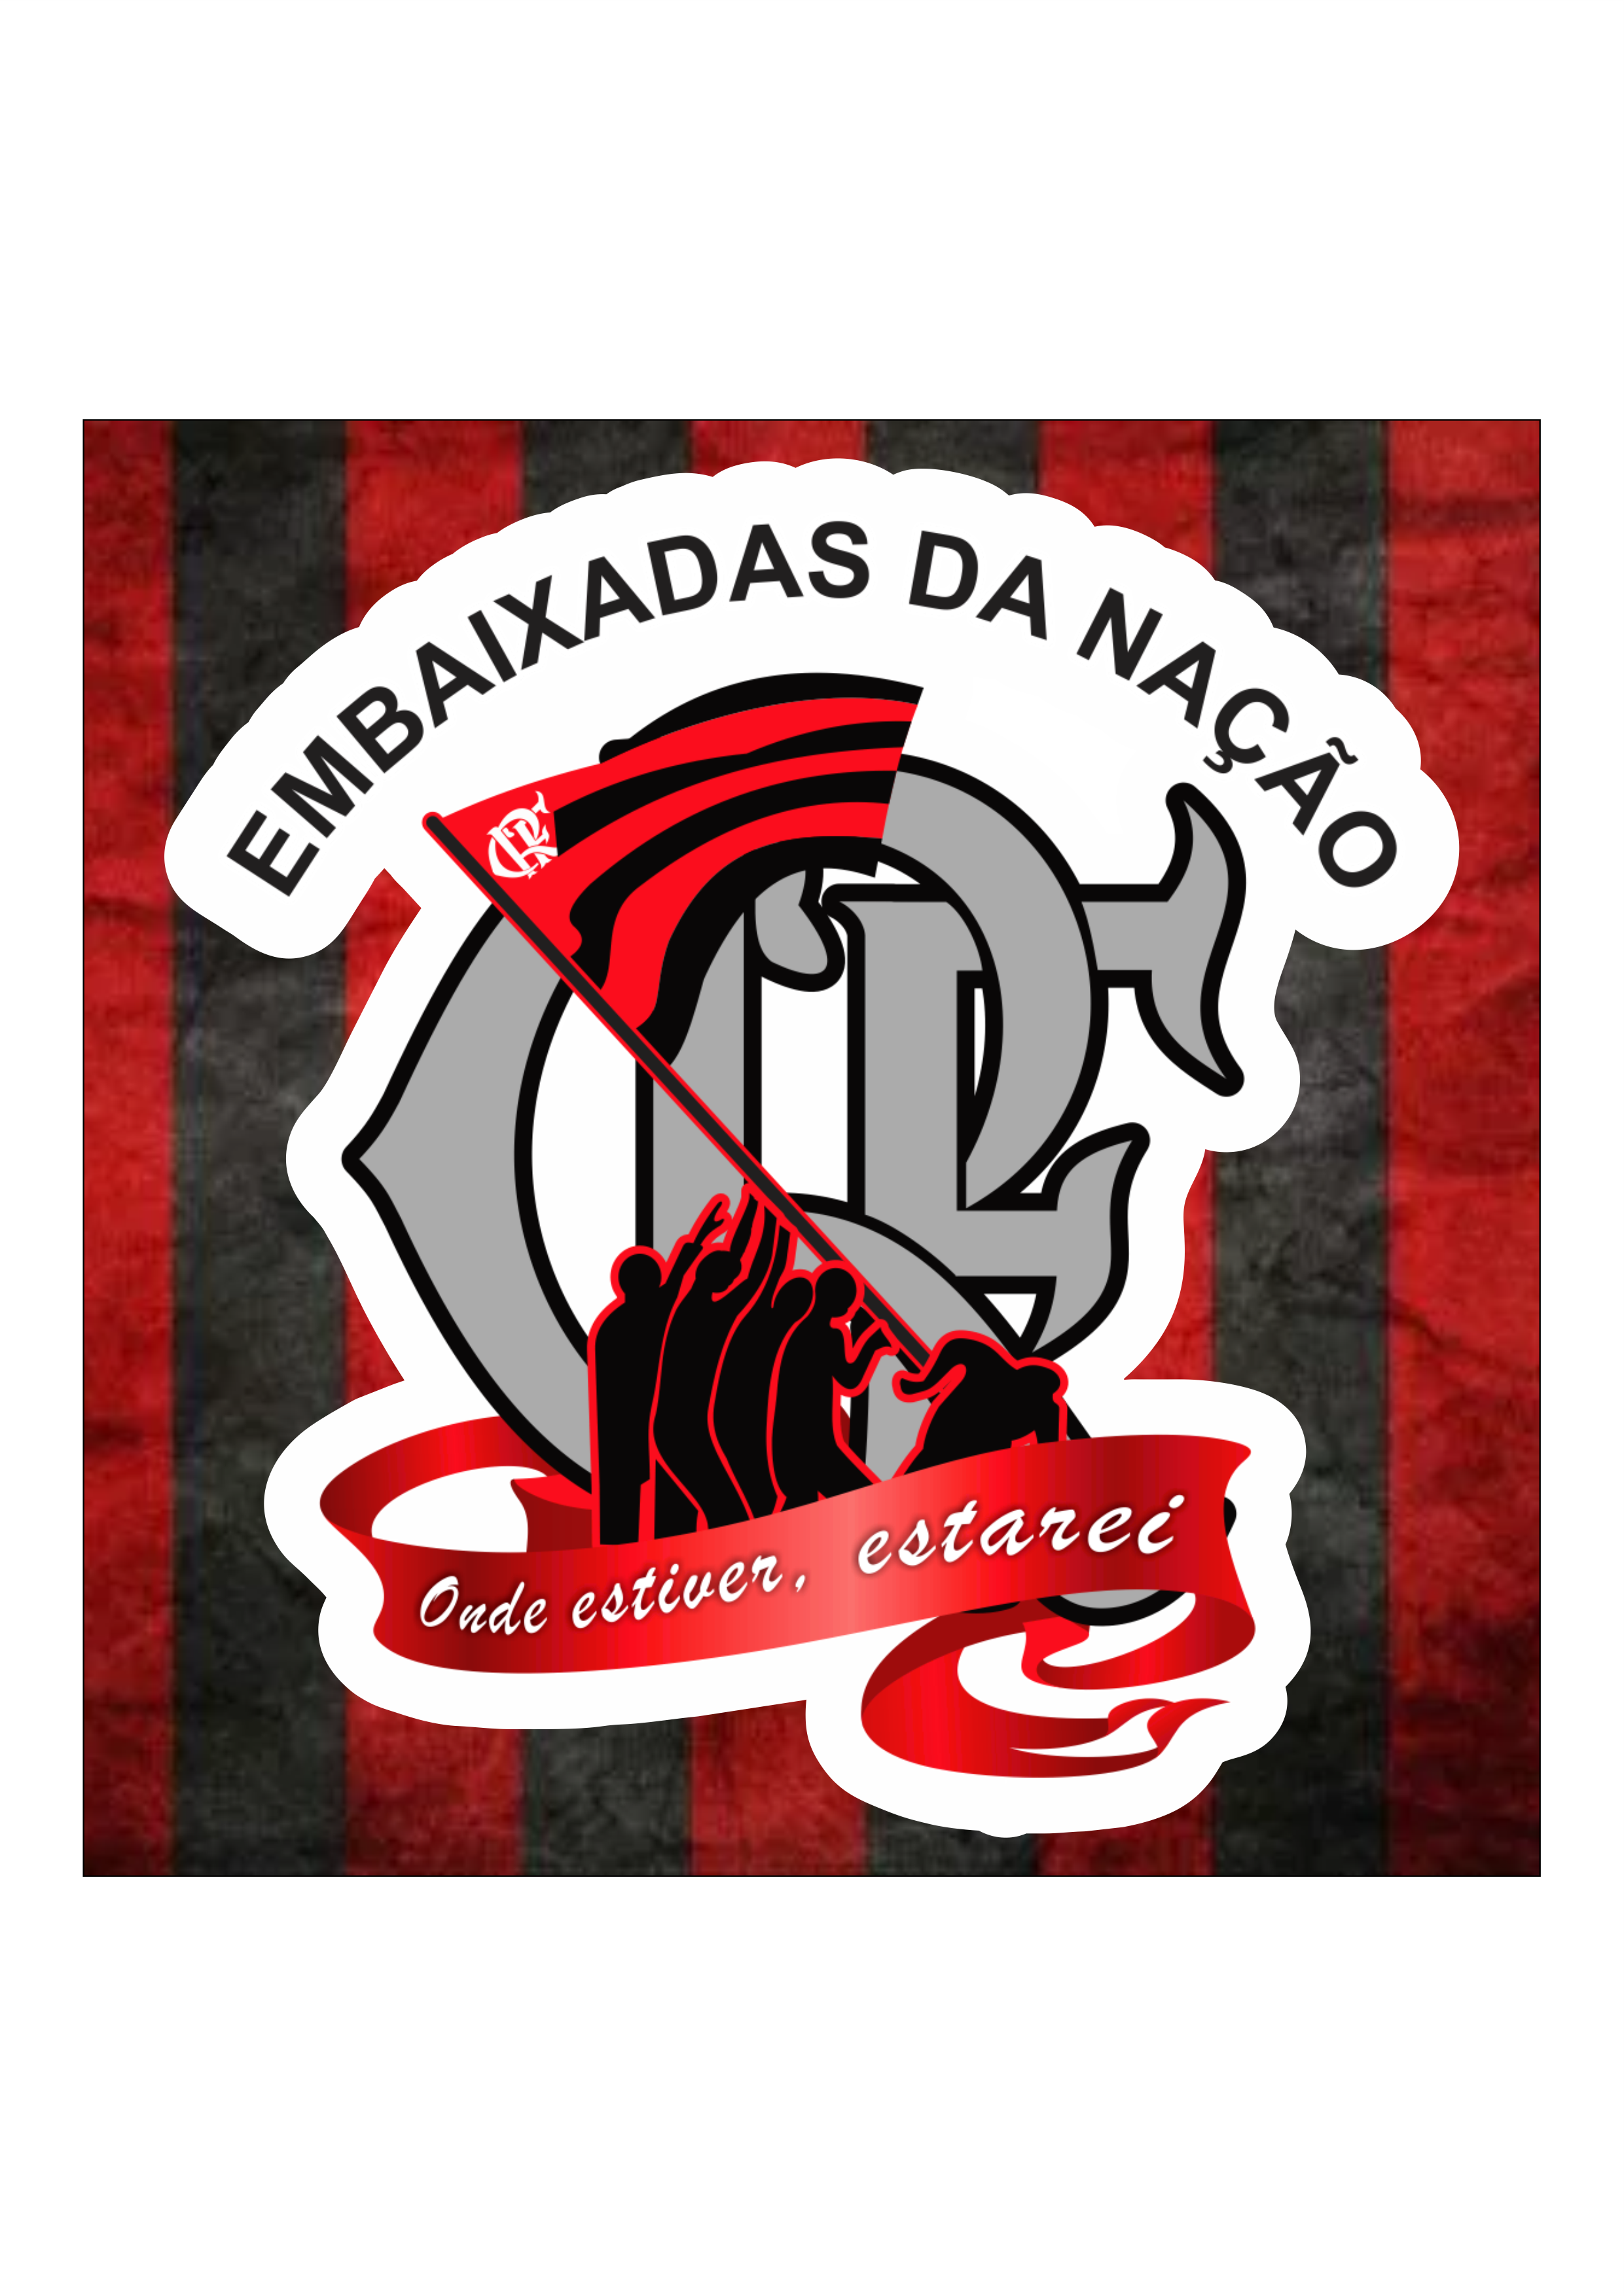 Flamengo torcida rubro negra tag adesivo etiqueta display png